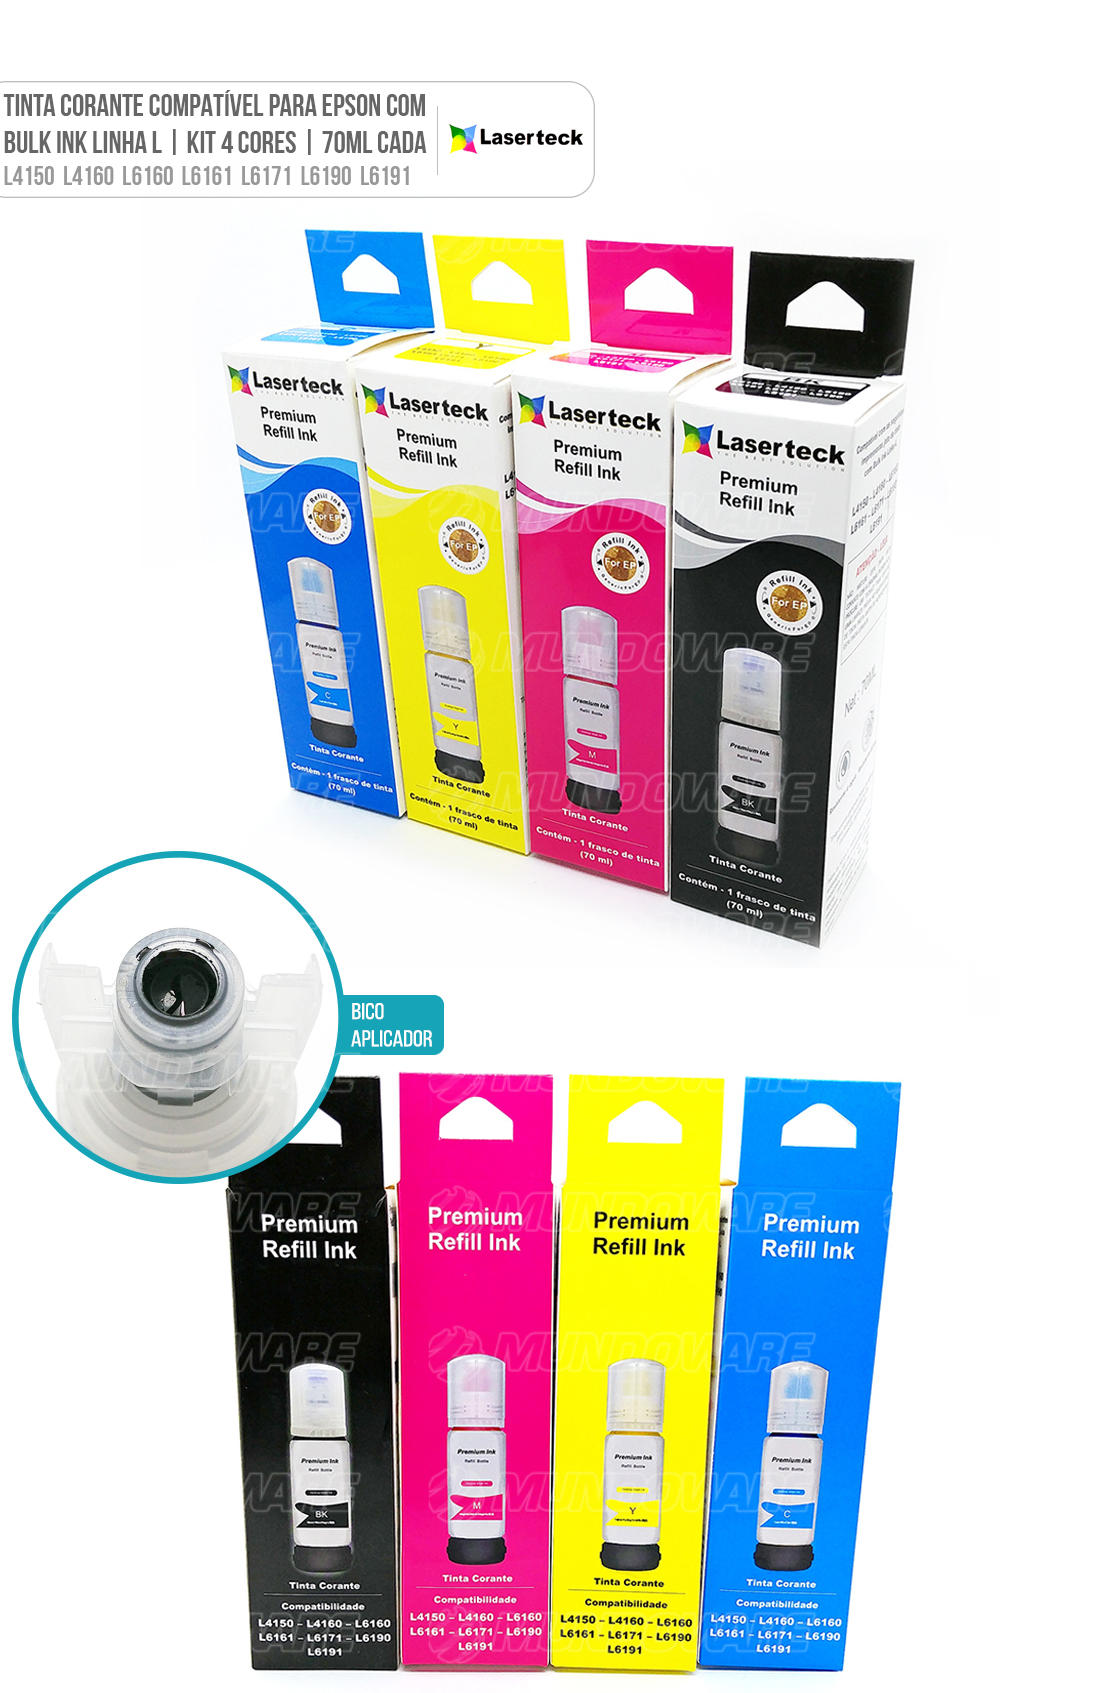 Kit Colorido 4 cores de Tinta Corante Compatível para impressora Jato de Tinta com Bulk Ink Linha L modelos L4150 L4160 L6160 L6161 L6171 L6190 L6191 L 4150 L 4160 L 6160 L 6161 L 6171 L 6190 L 6191